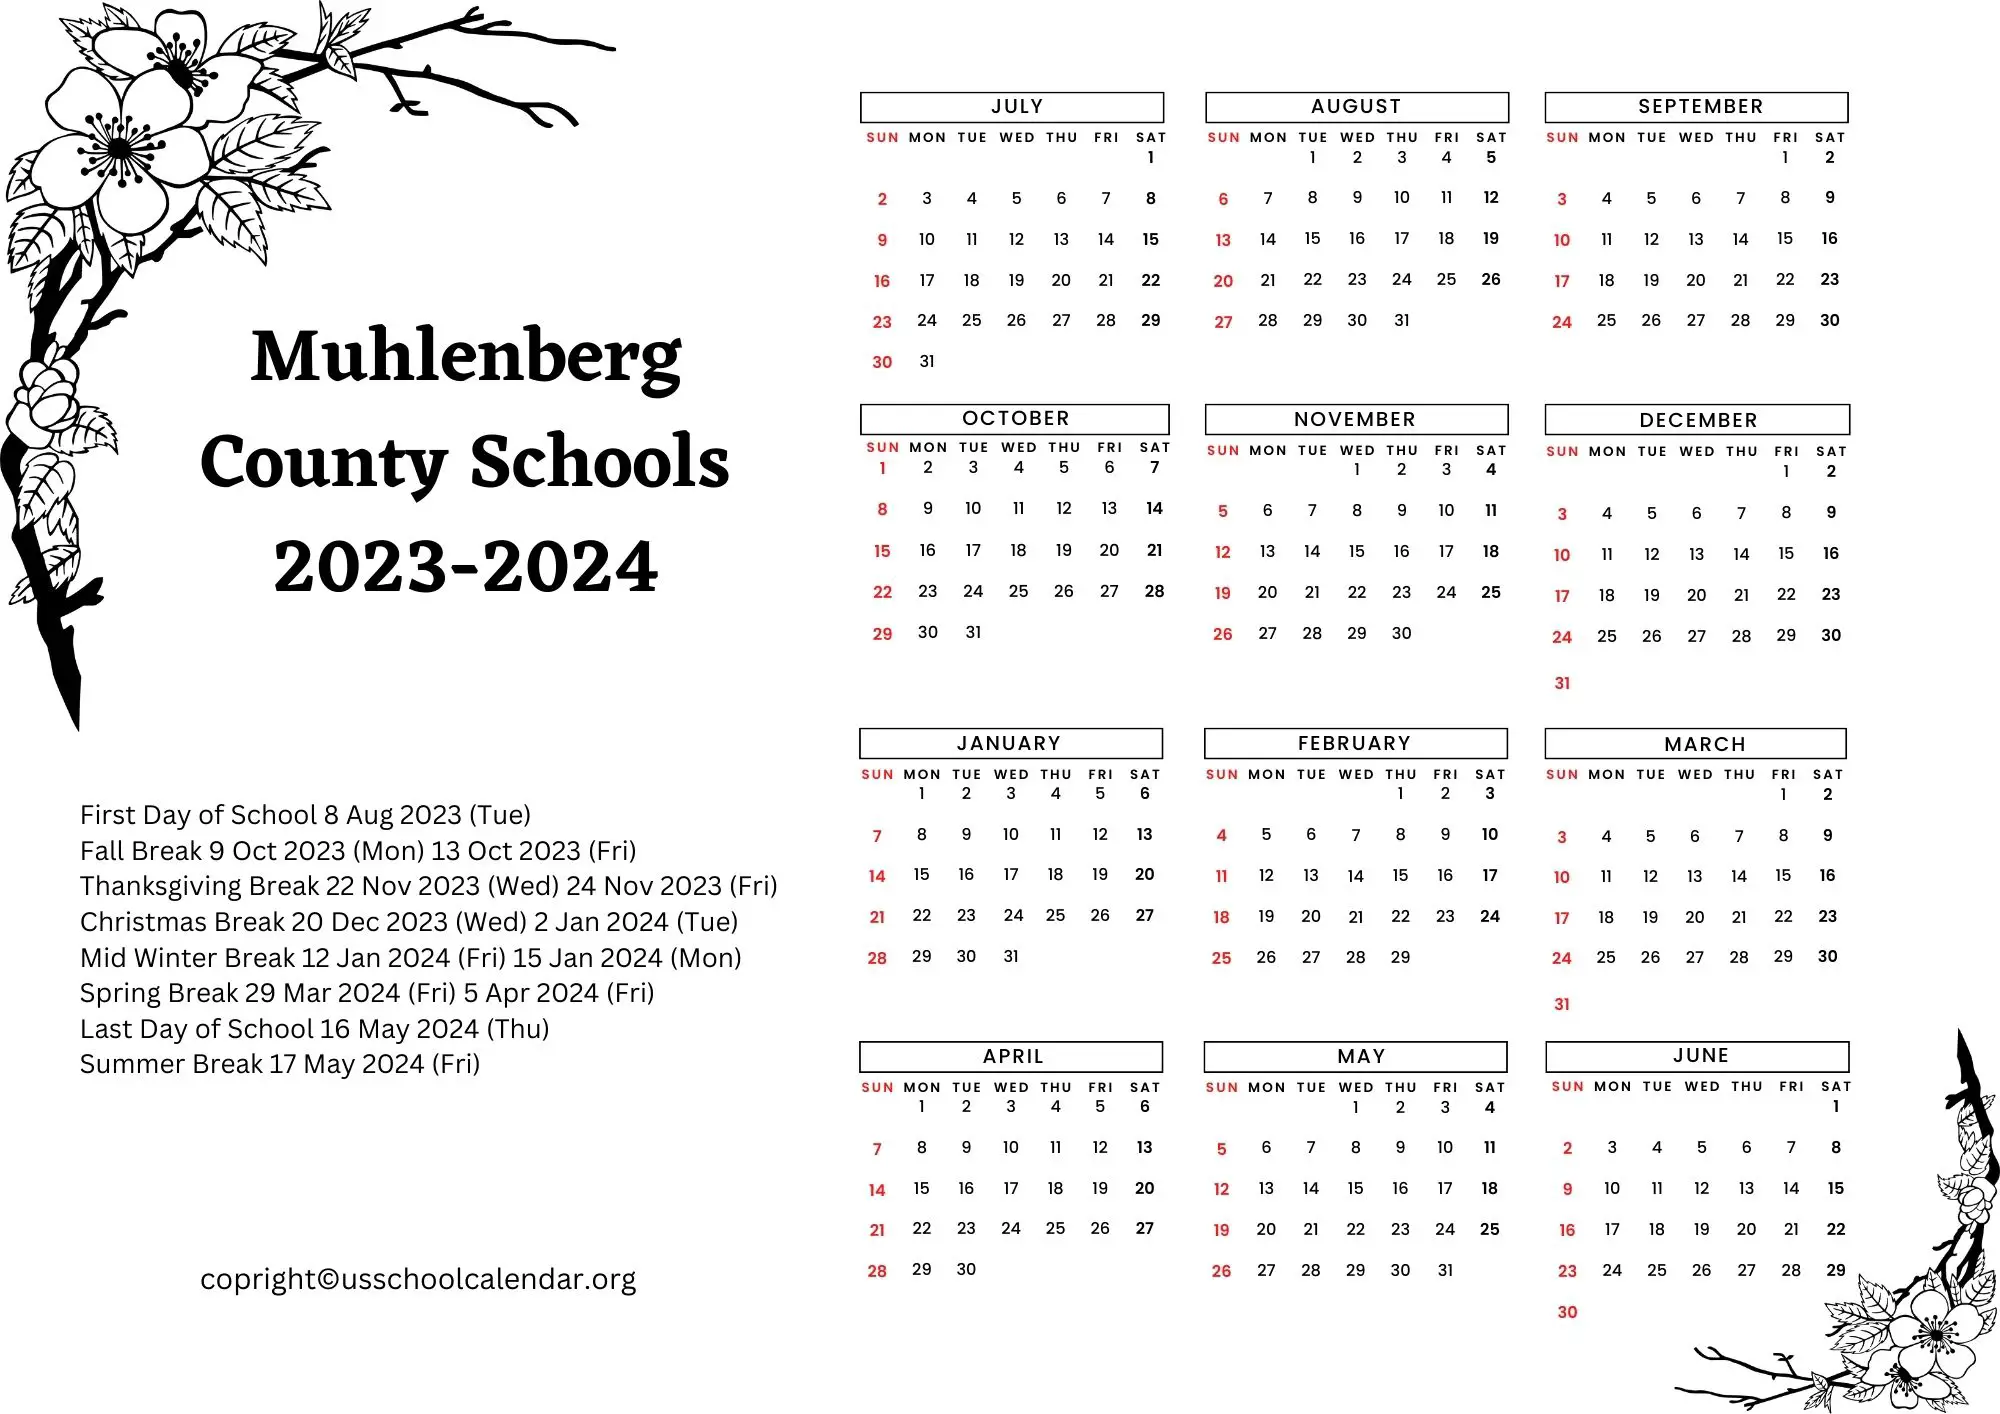 muhlenberg-county-schools-calendar-with-holidays-2023-2024